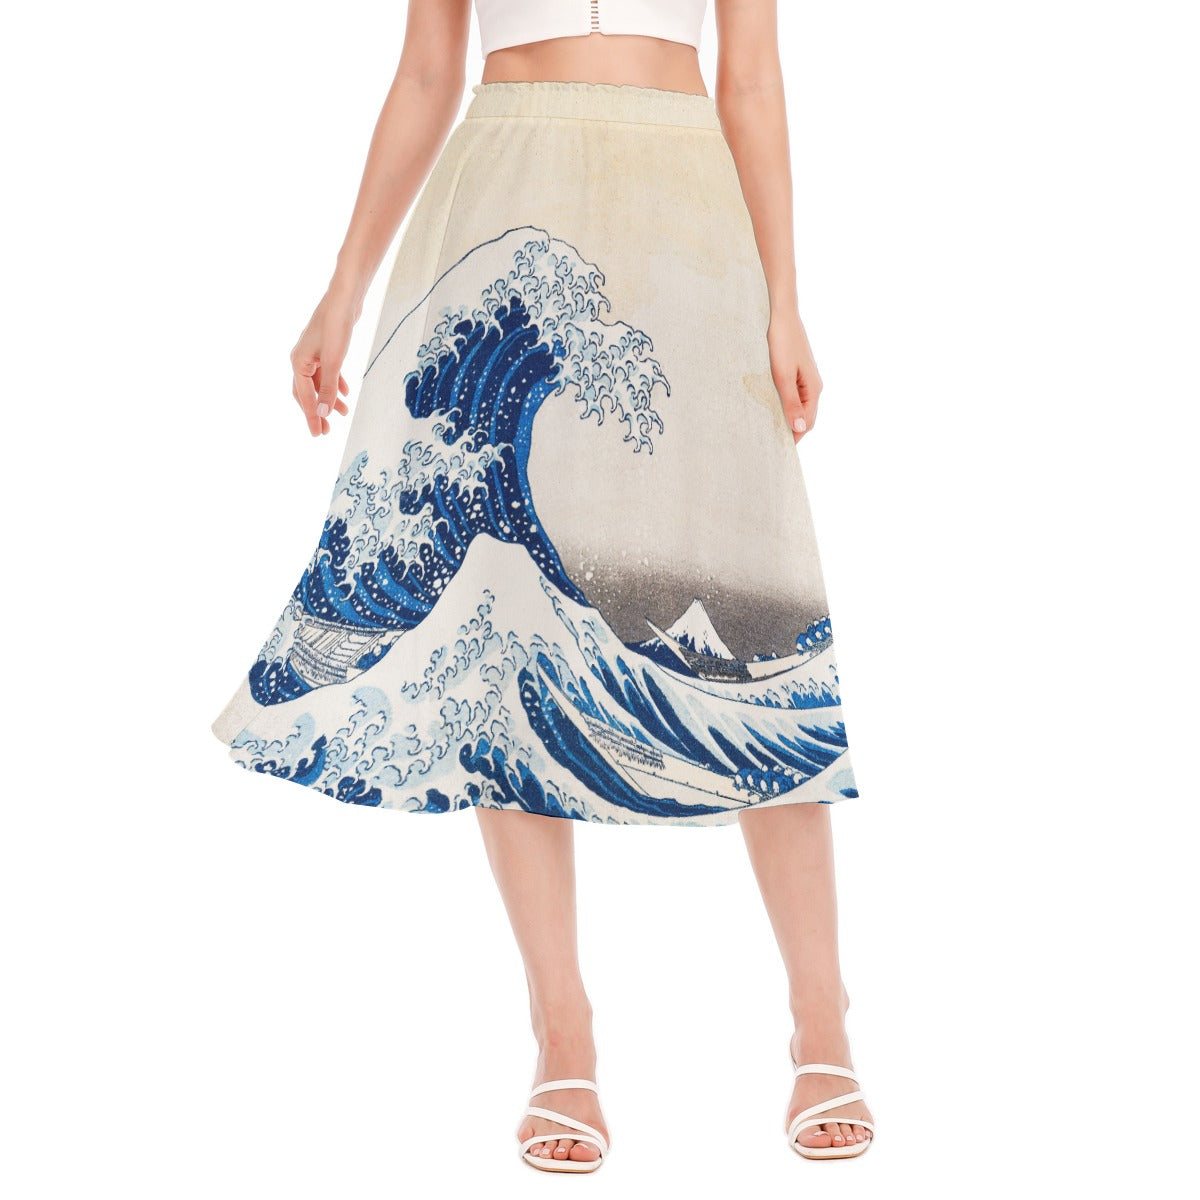 Flowing chiffon skirt in oceanic hues